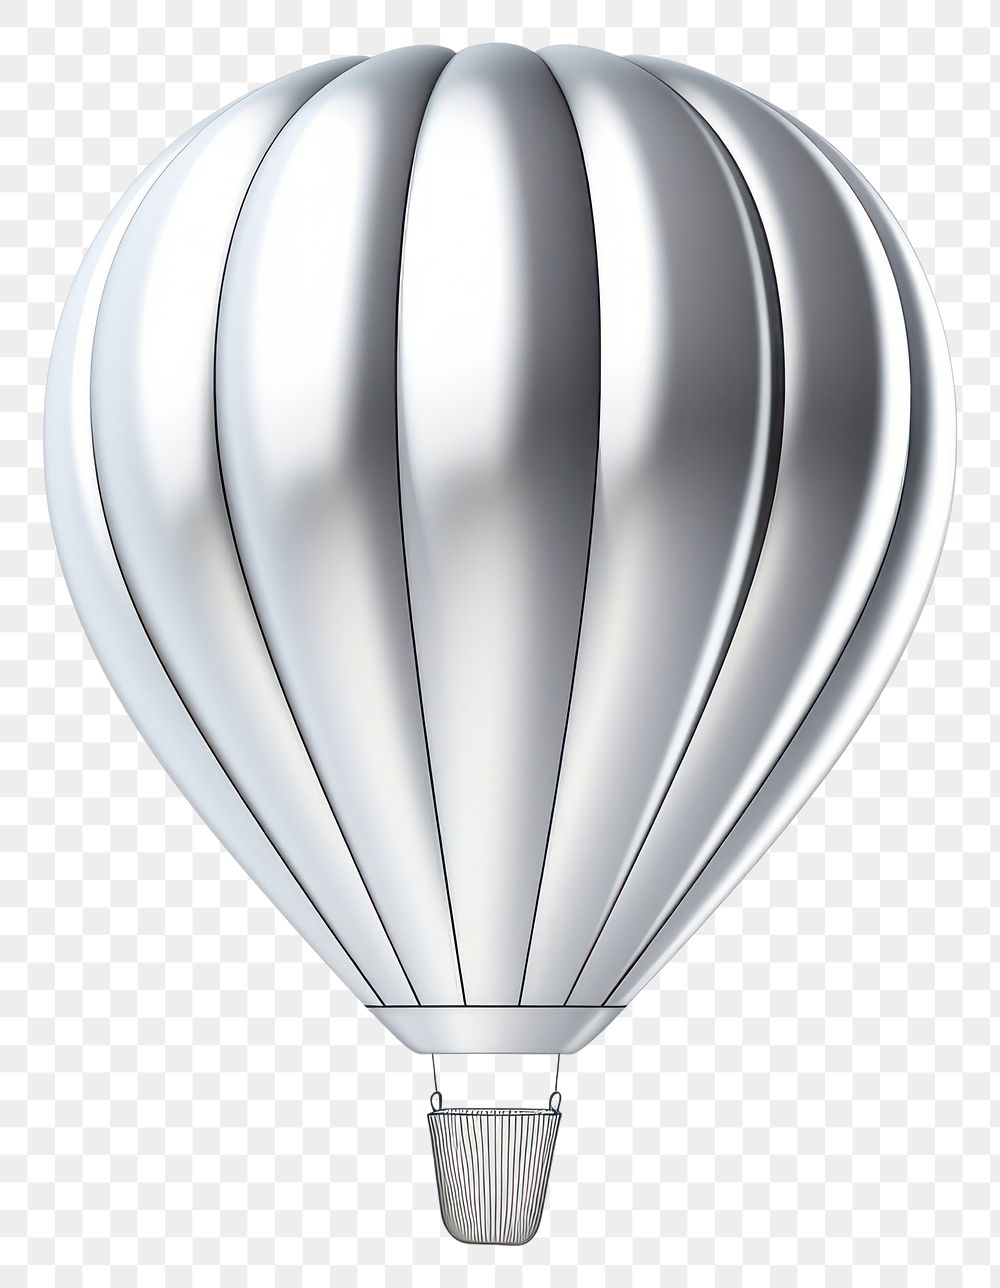 PNG Hot air ballon icon aircraft balloon white background.